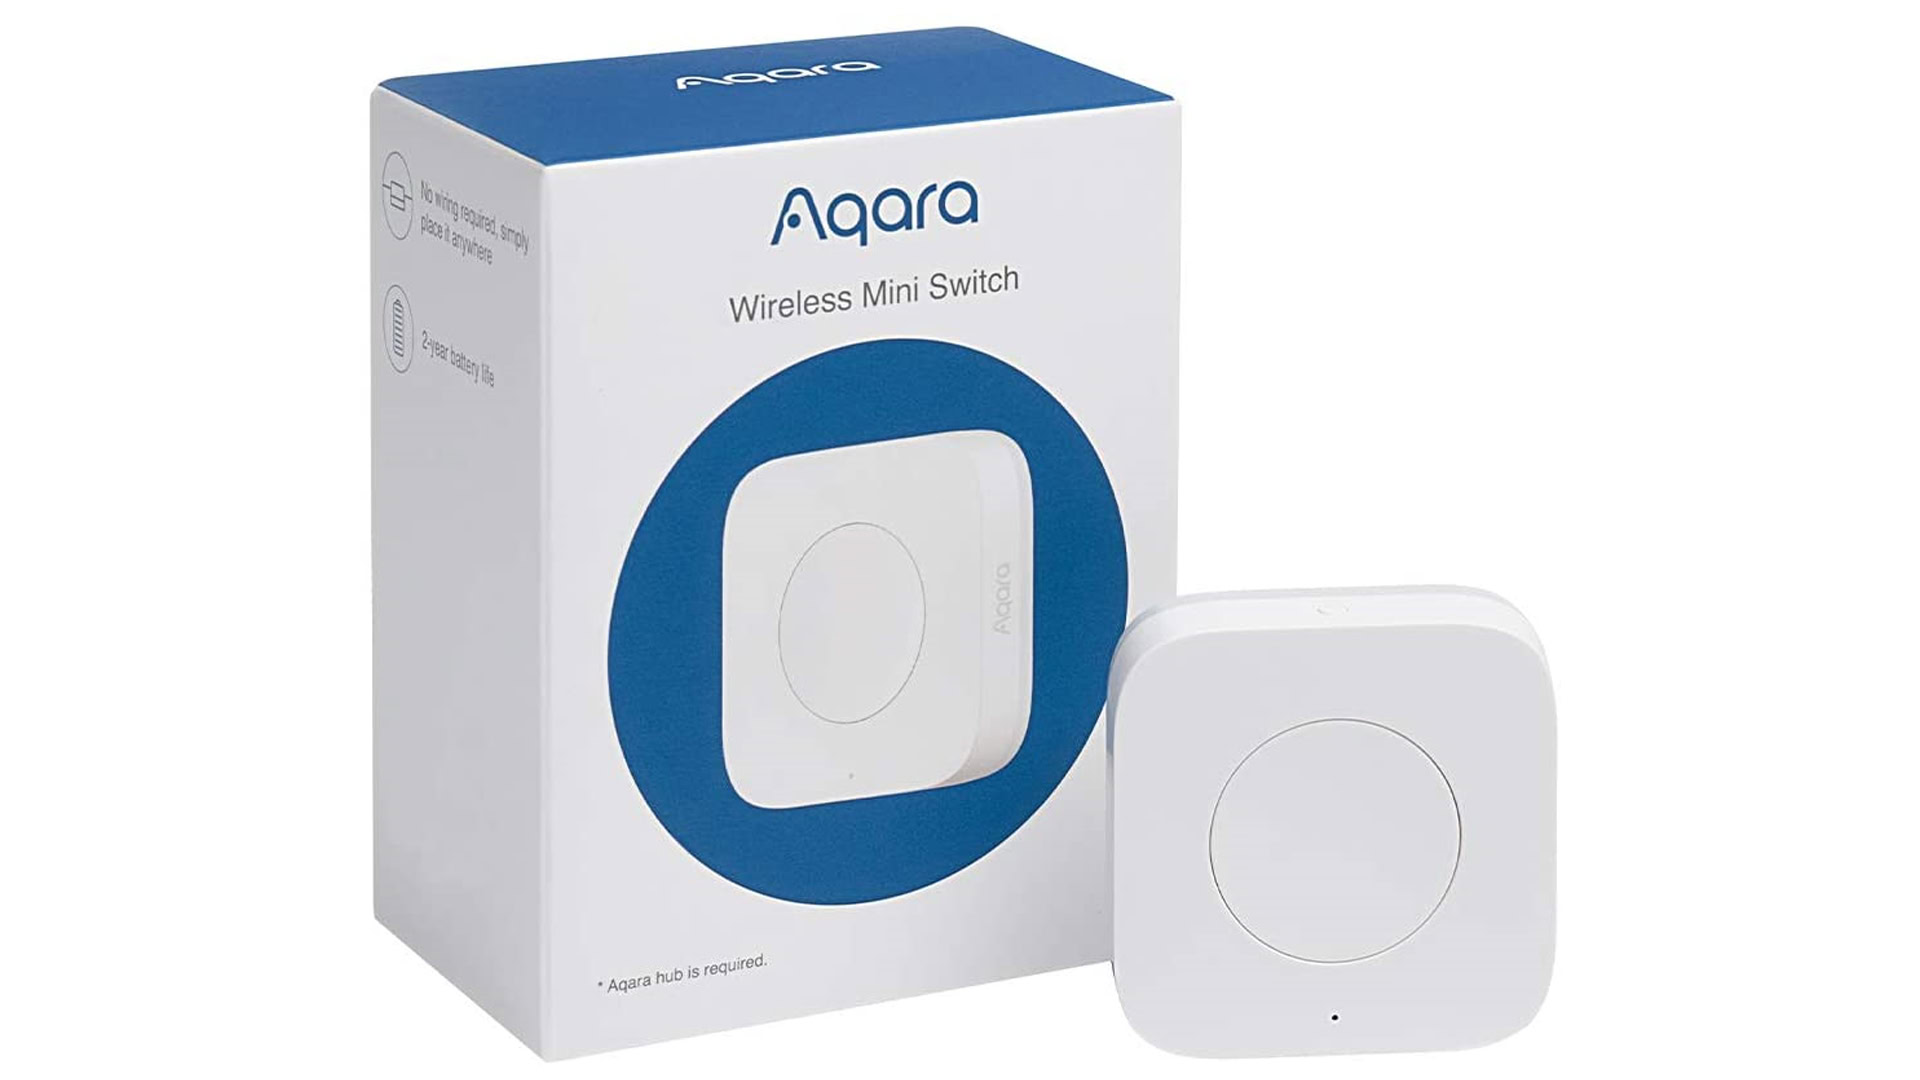 The Aqara Wireless Mini Switch